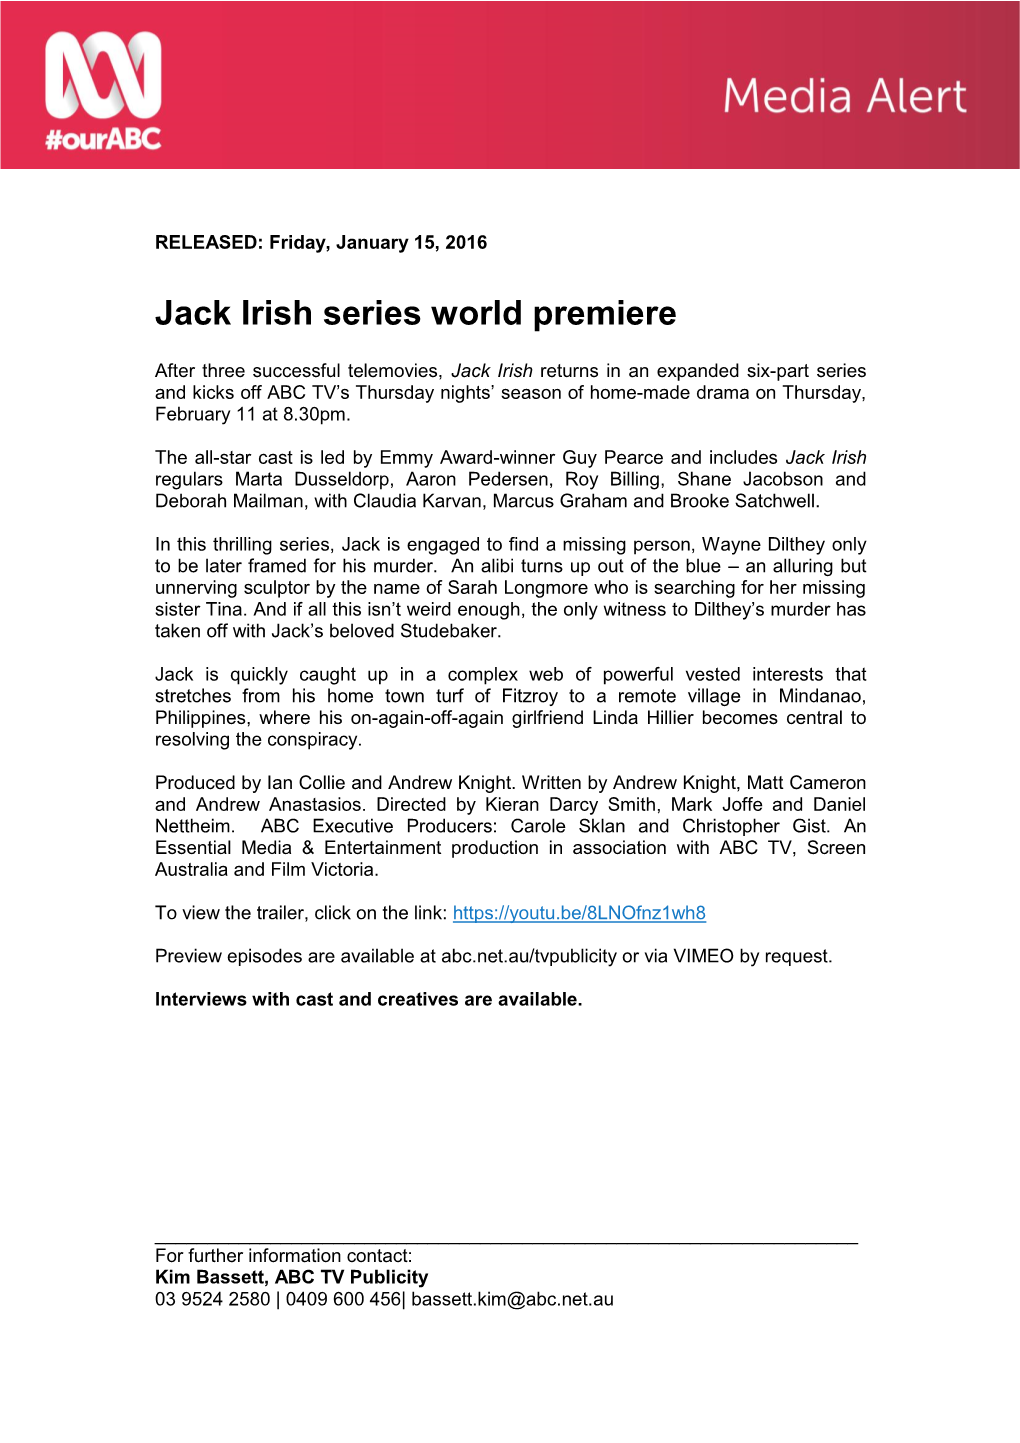 Jack Irish Series World Premiere